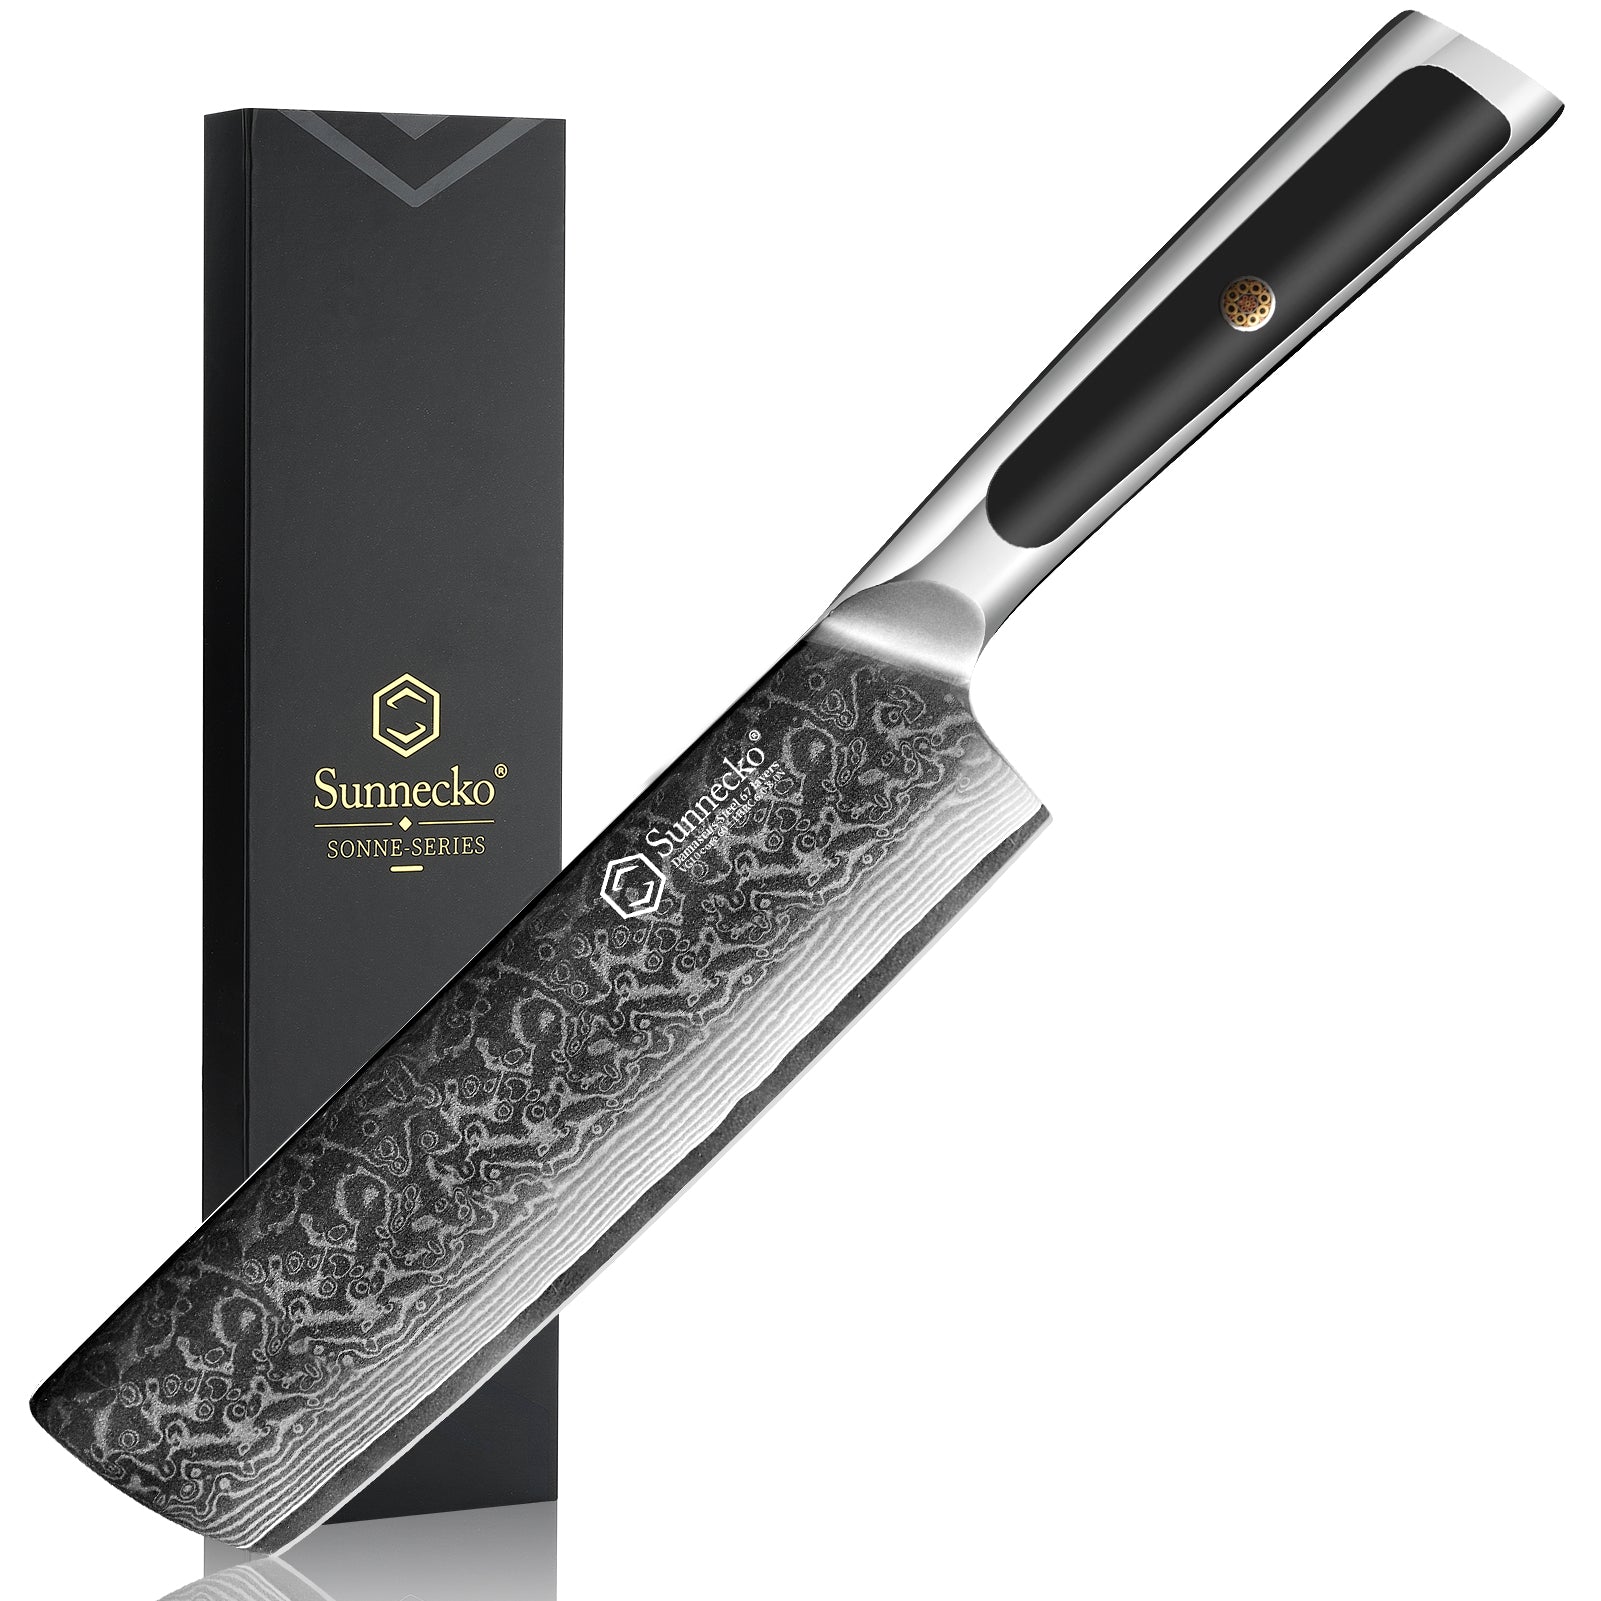 Asian Knife Japanese Damascus Steel Nakiri Knife Vegetables Cleaver Cooking  Tools Kitchen Knives VG10 Japanese Knives PP Handle - AliExpress